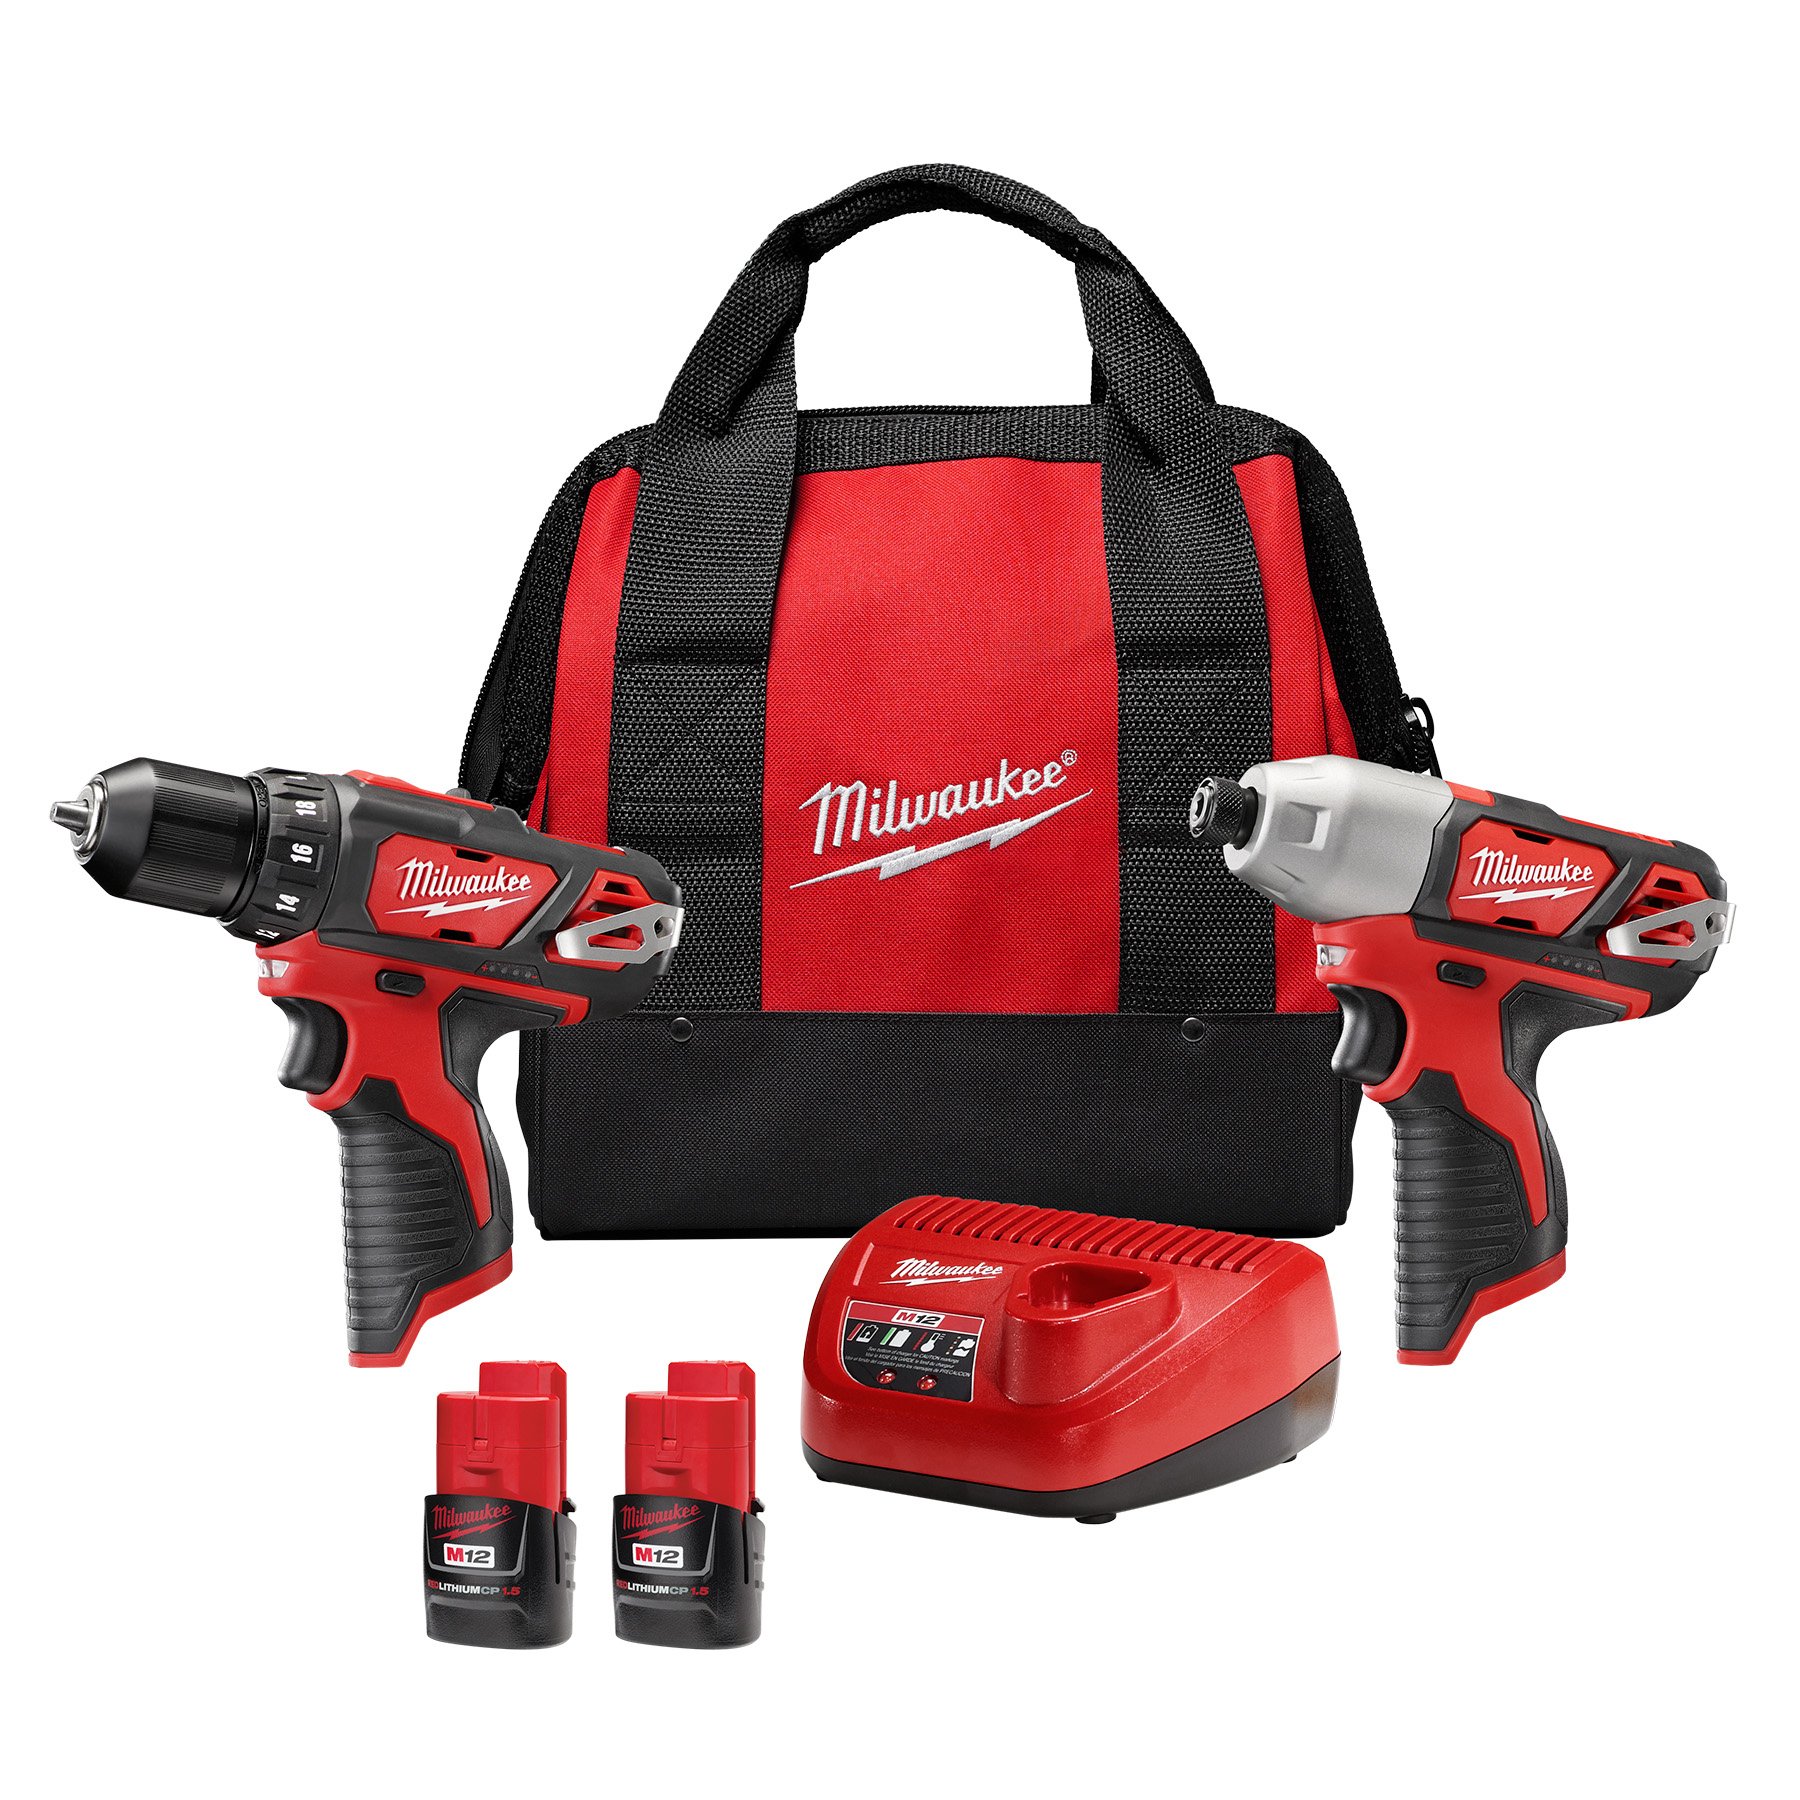 Save $50 - Milwaukee M12 Drill/Impact Combo Kit